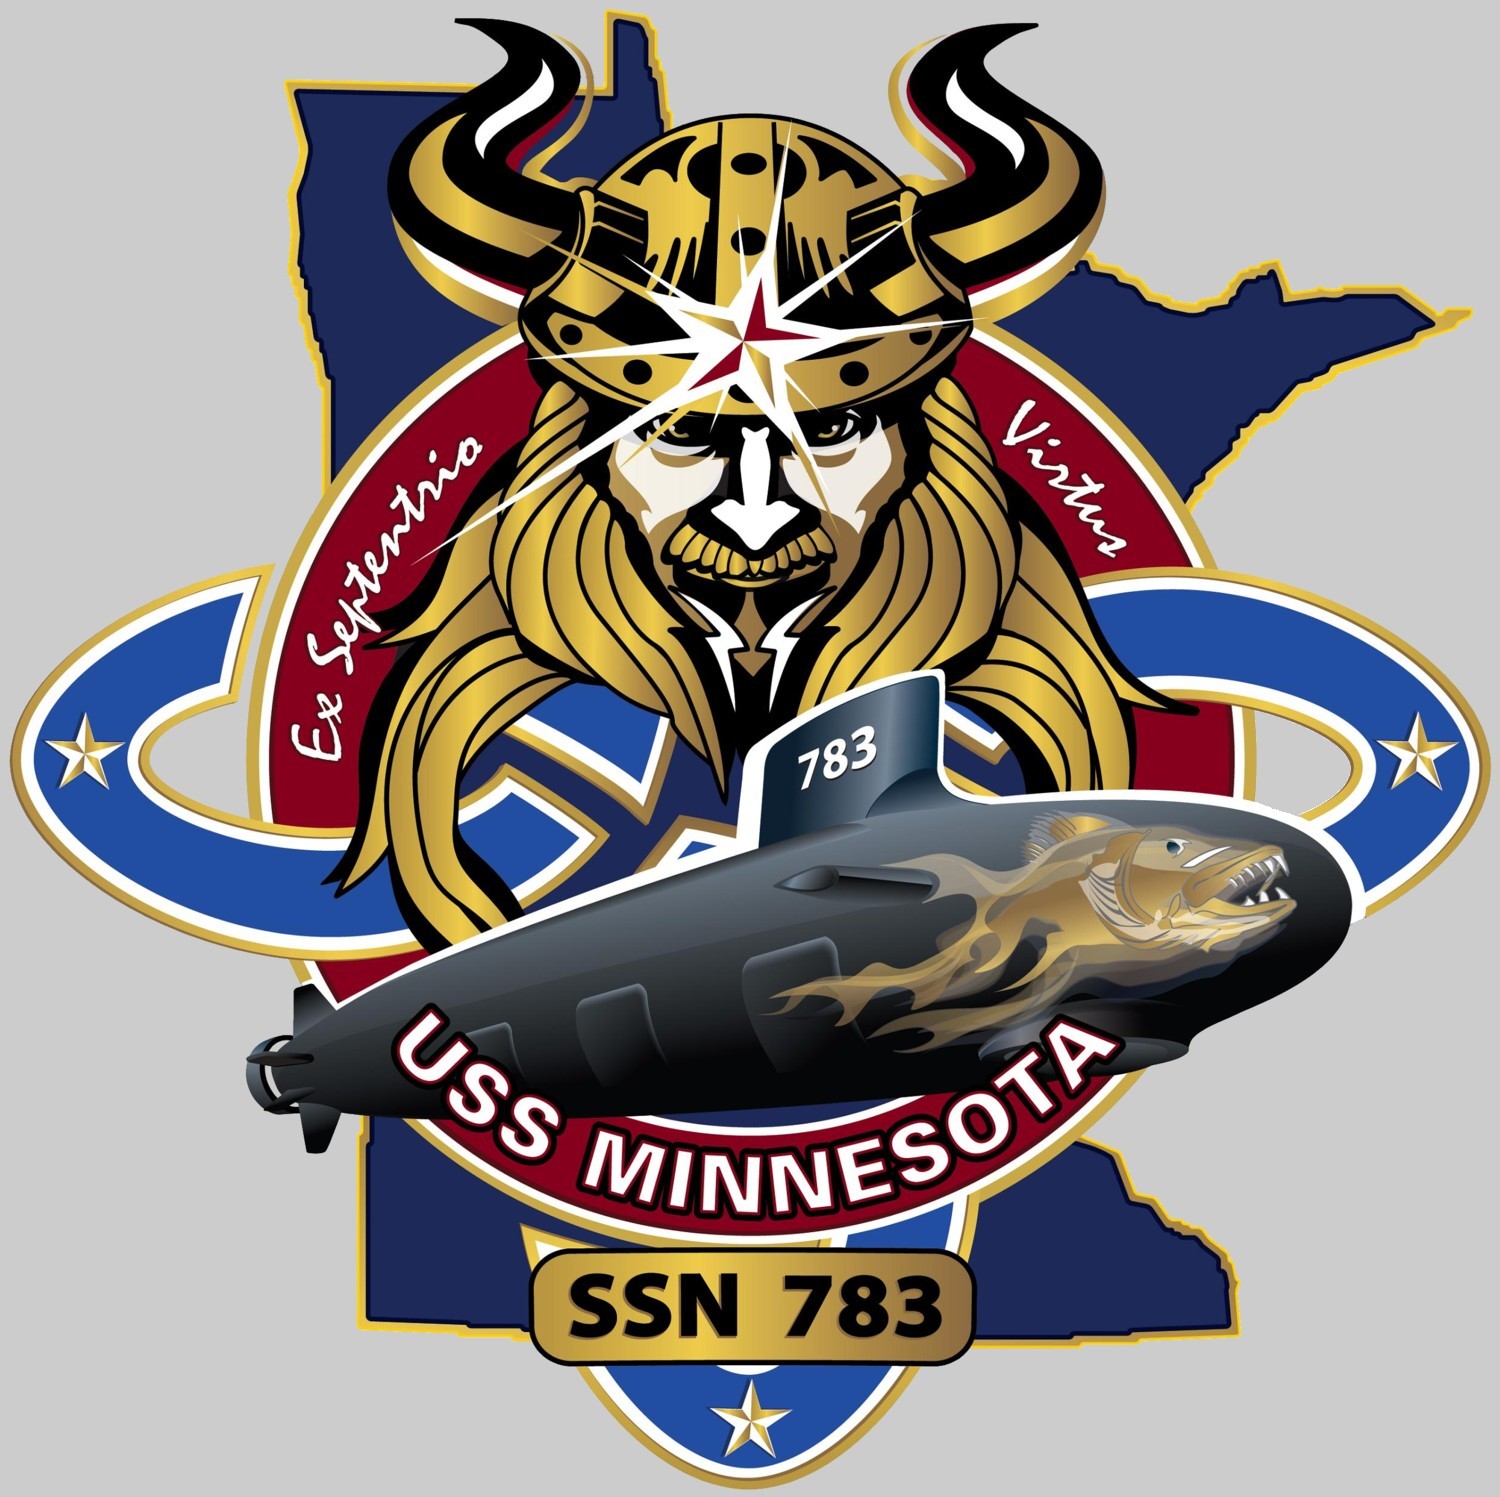 ssn-783 uss minnesota insignia crest patch badge virginia class attack submarine us navy 02x